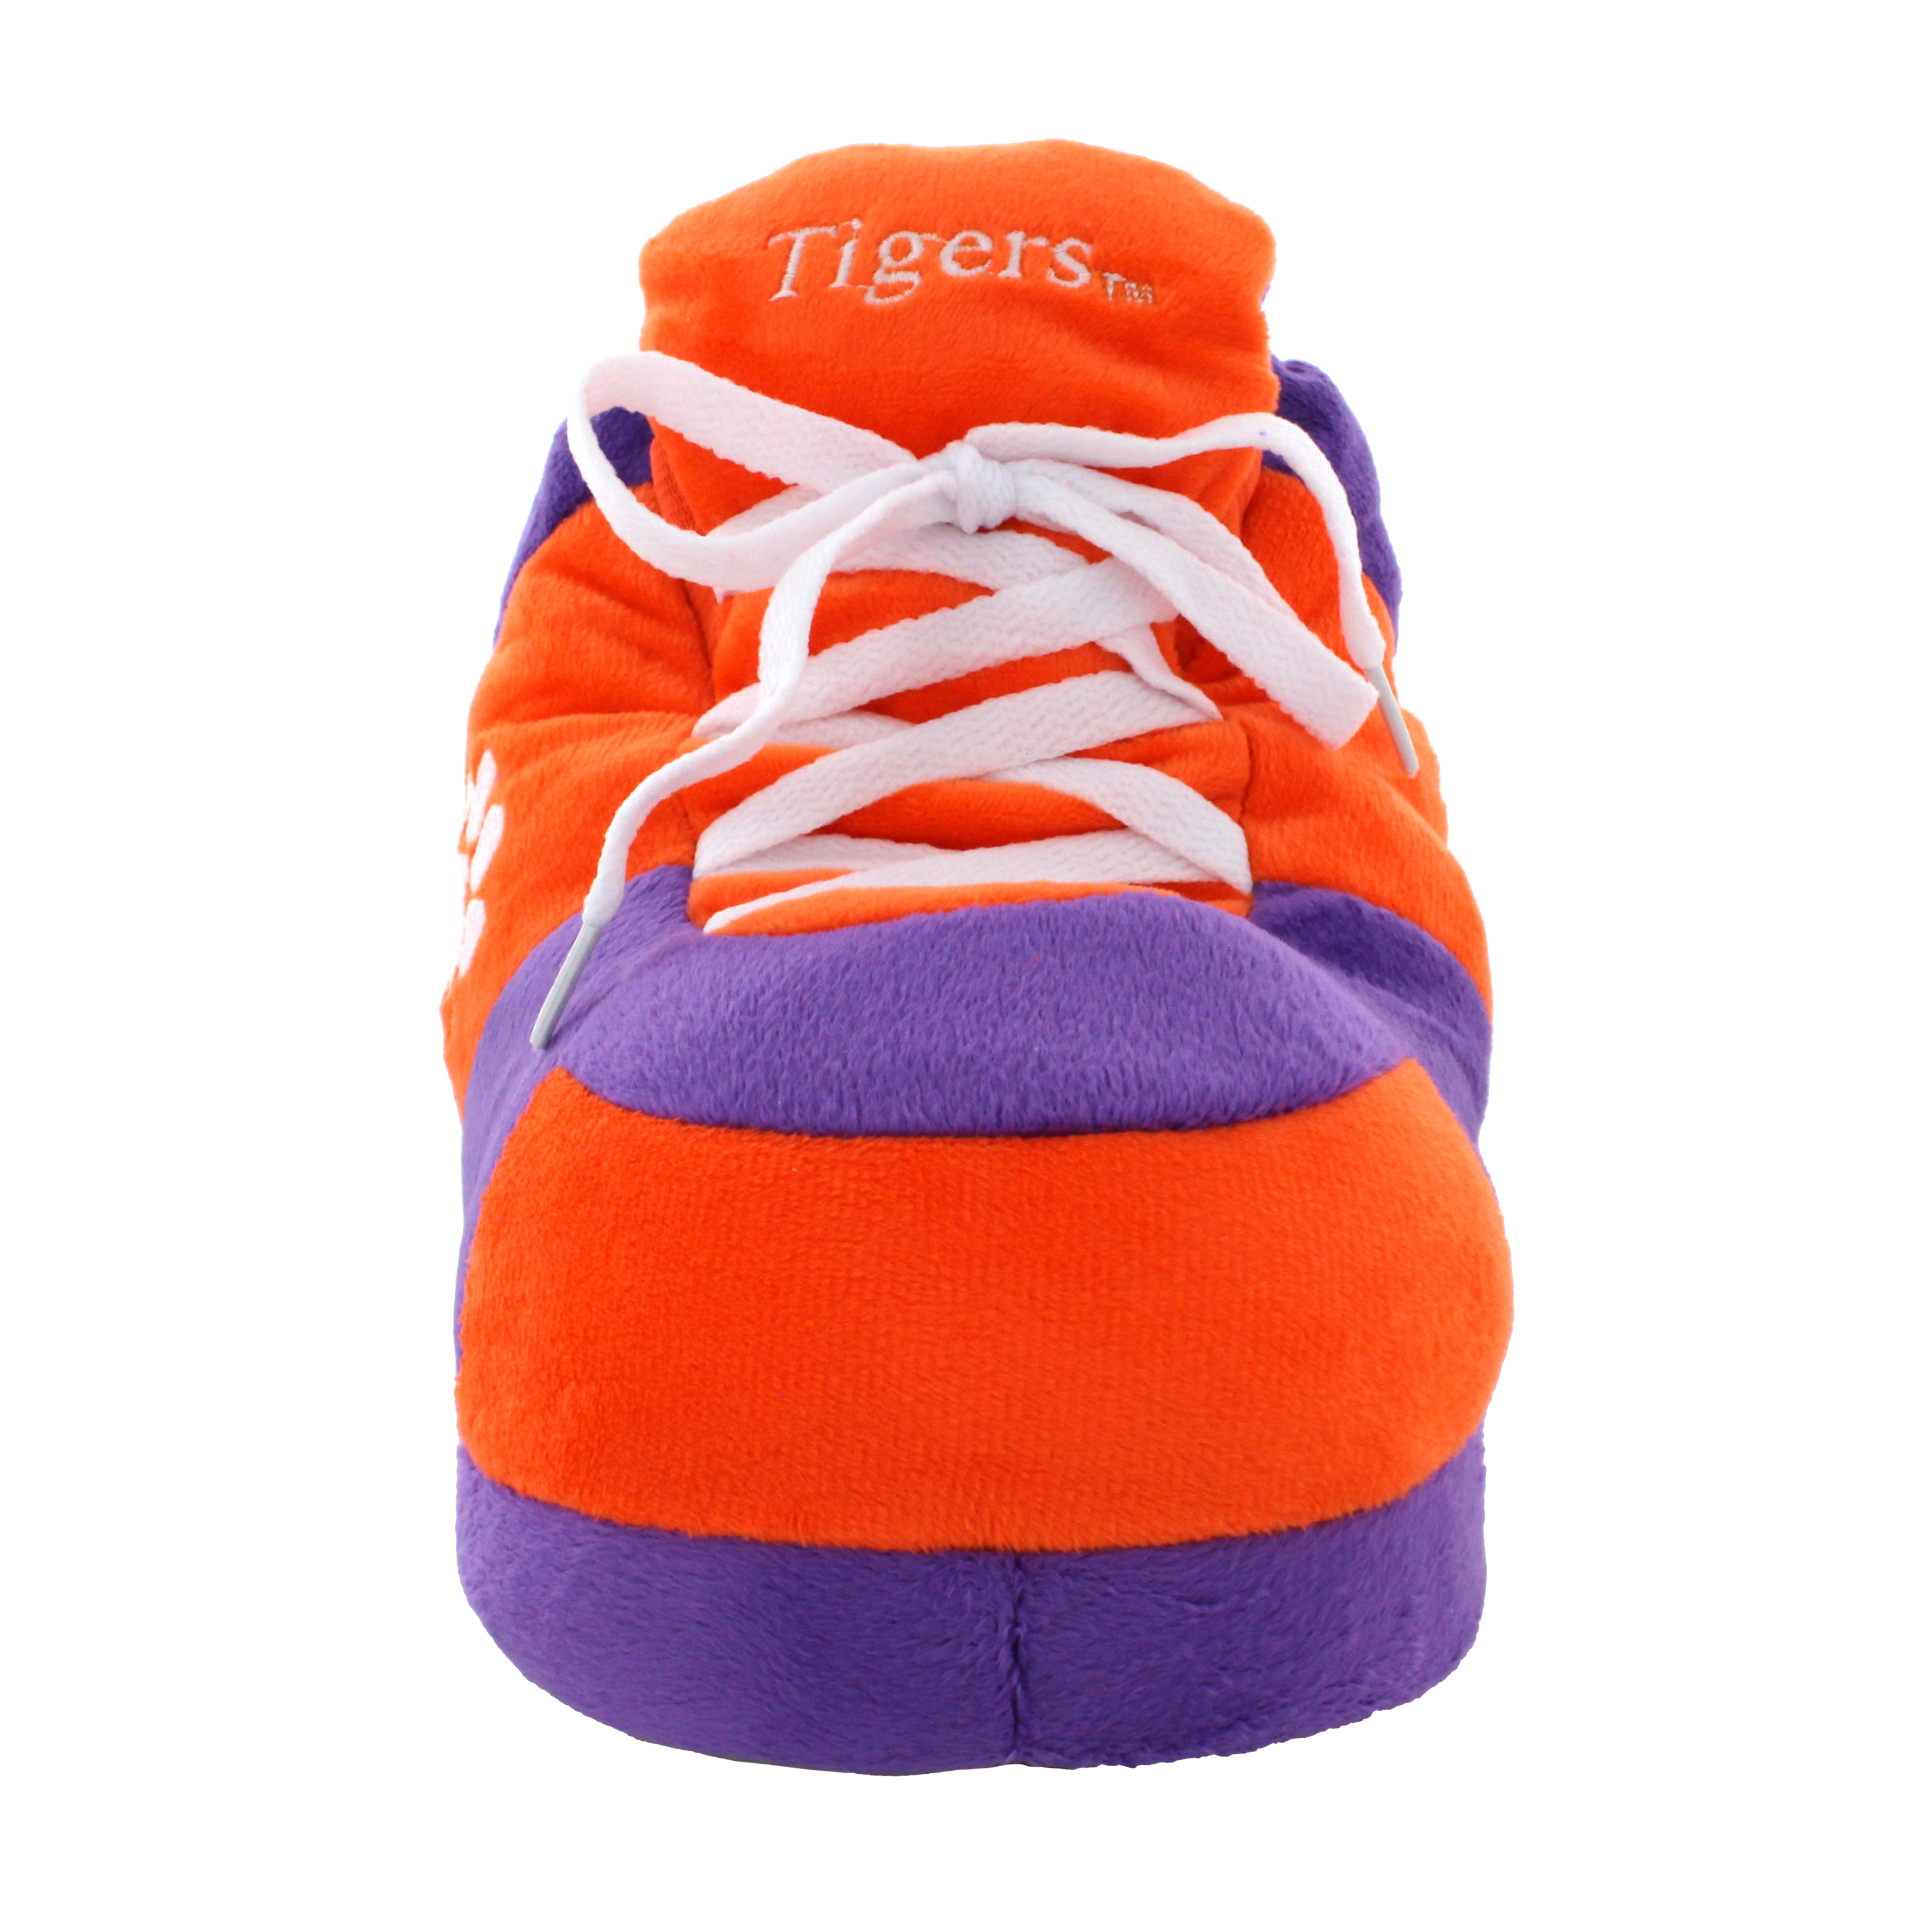 Clemson Tigers Original Comfy Feet Sneaker Slipper, X-Large - image 5 of 8